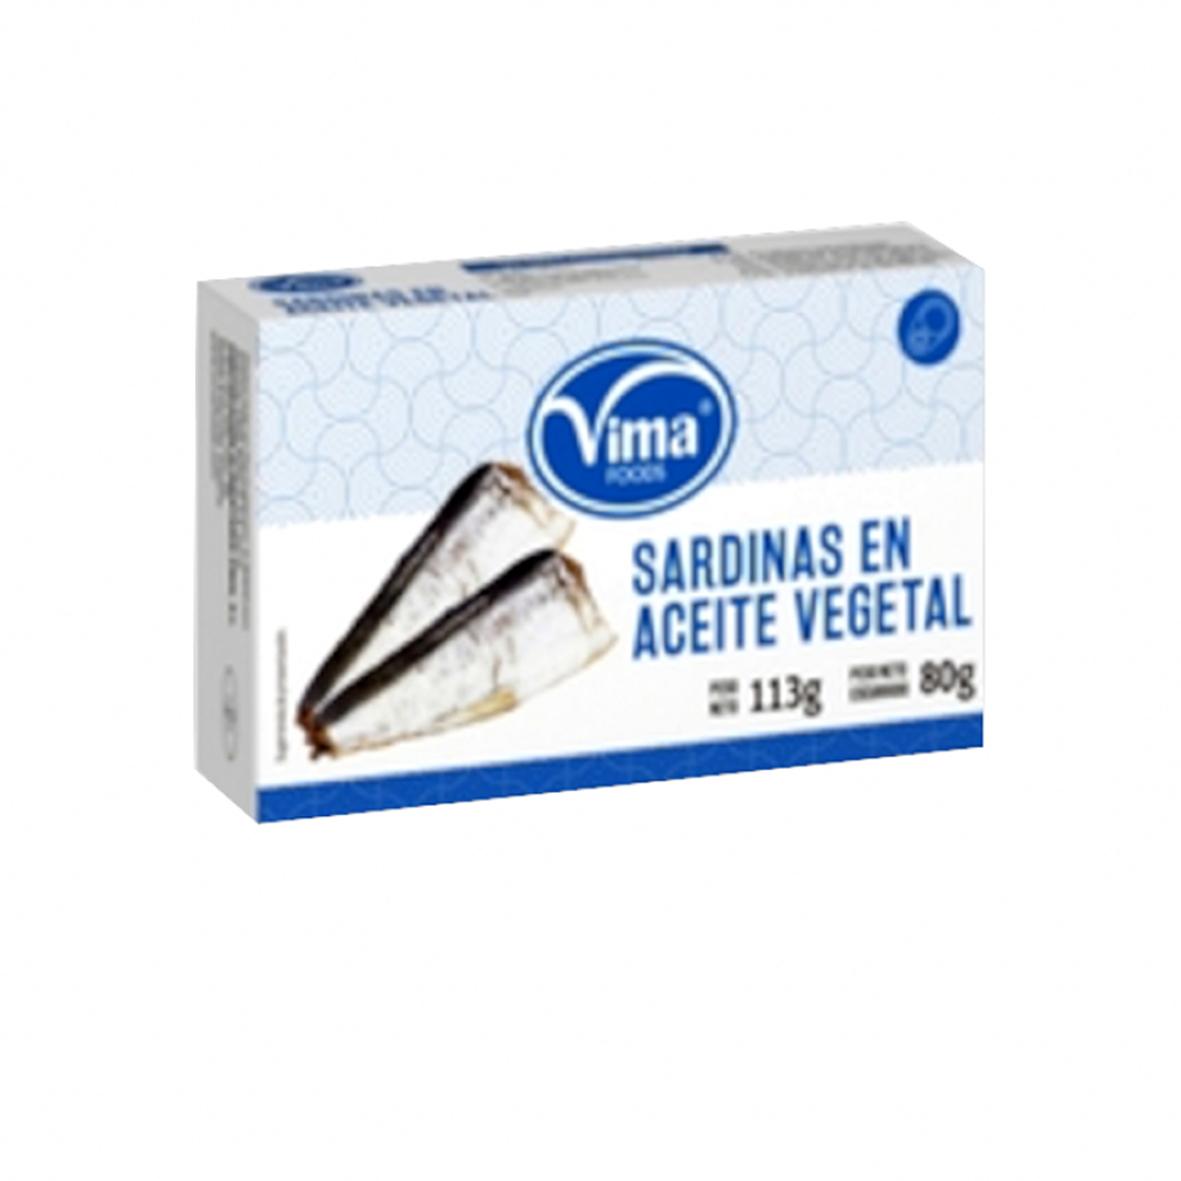 Sardinas en aceite vegetal Vima Foods (113 g / 3.99 oz)